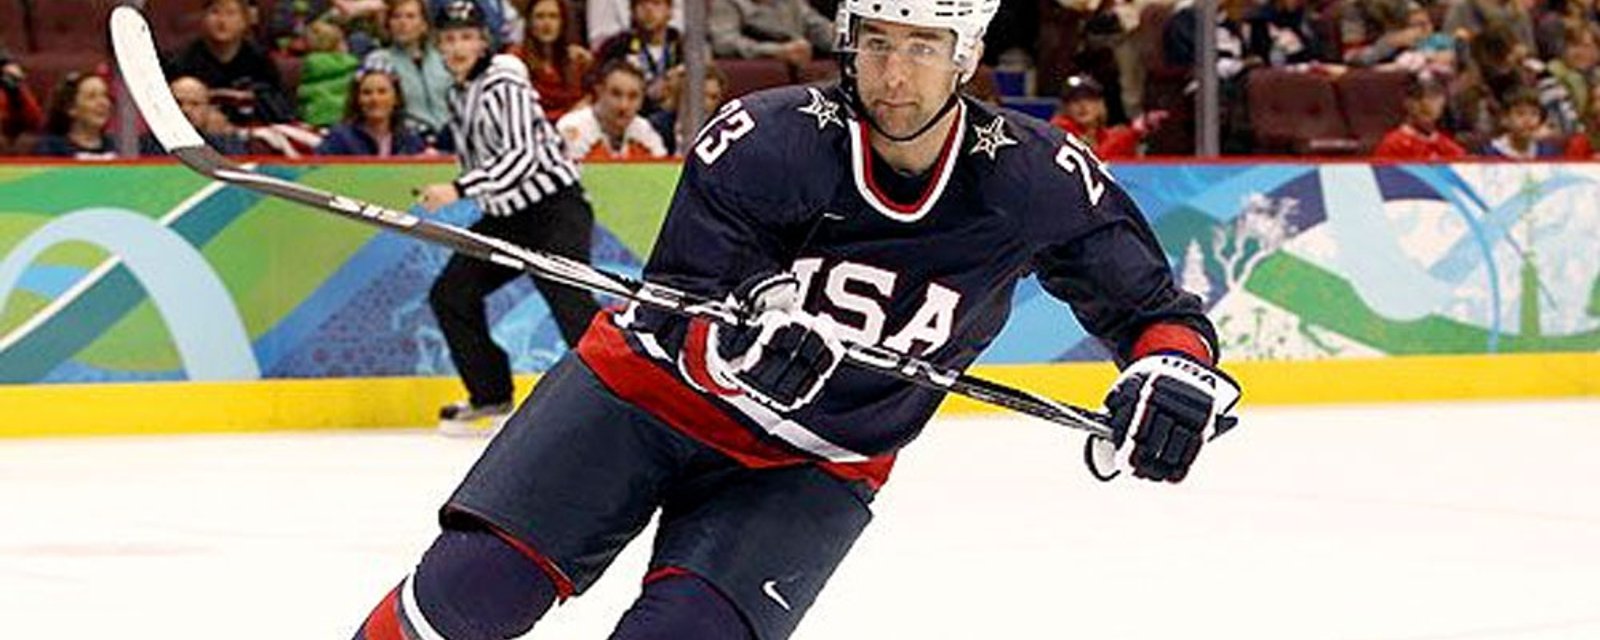 Former NHLer Chris Drury is the new boss of USA Hockey